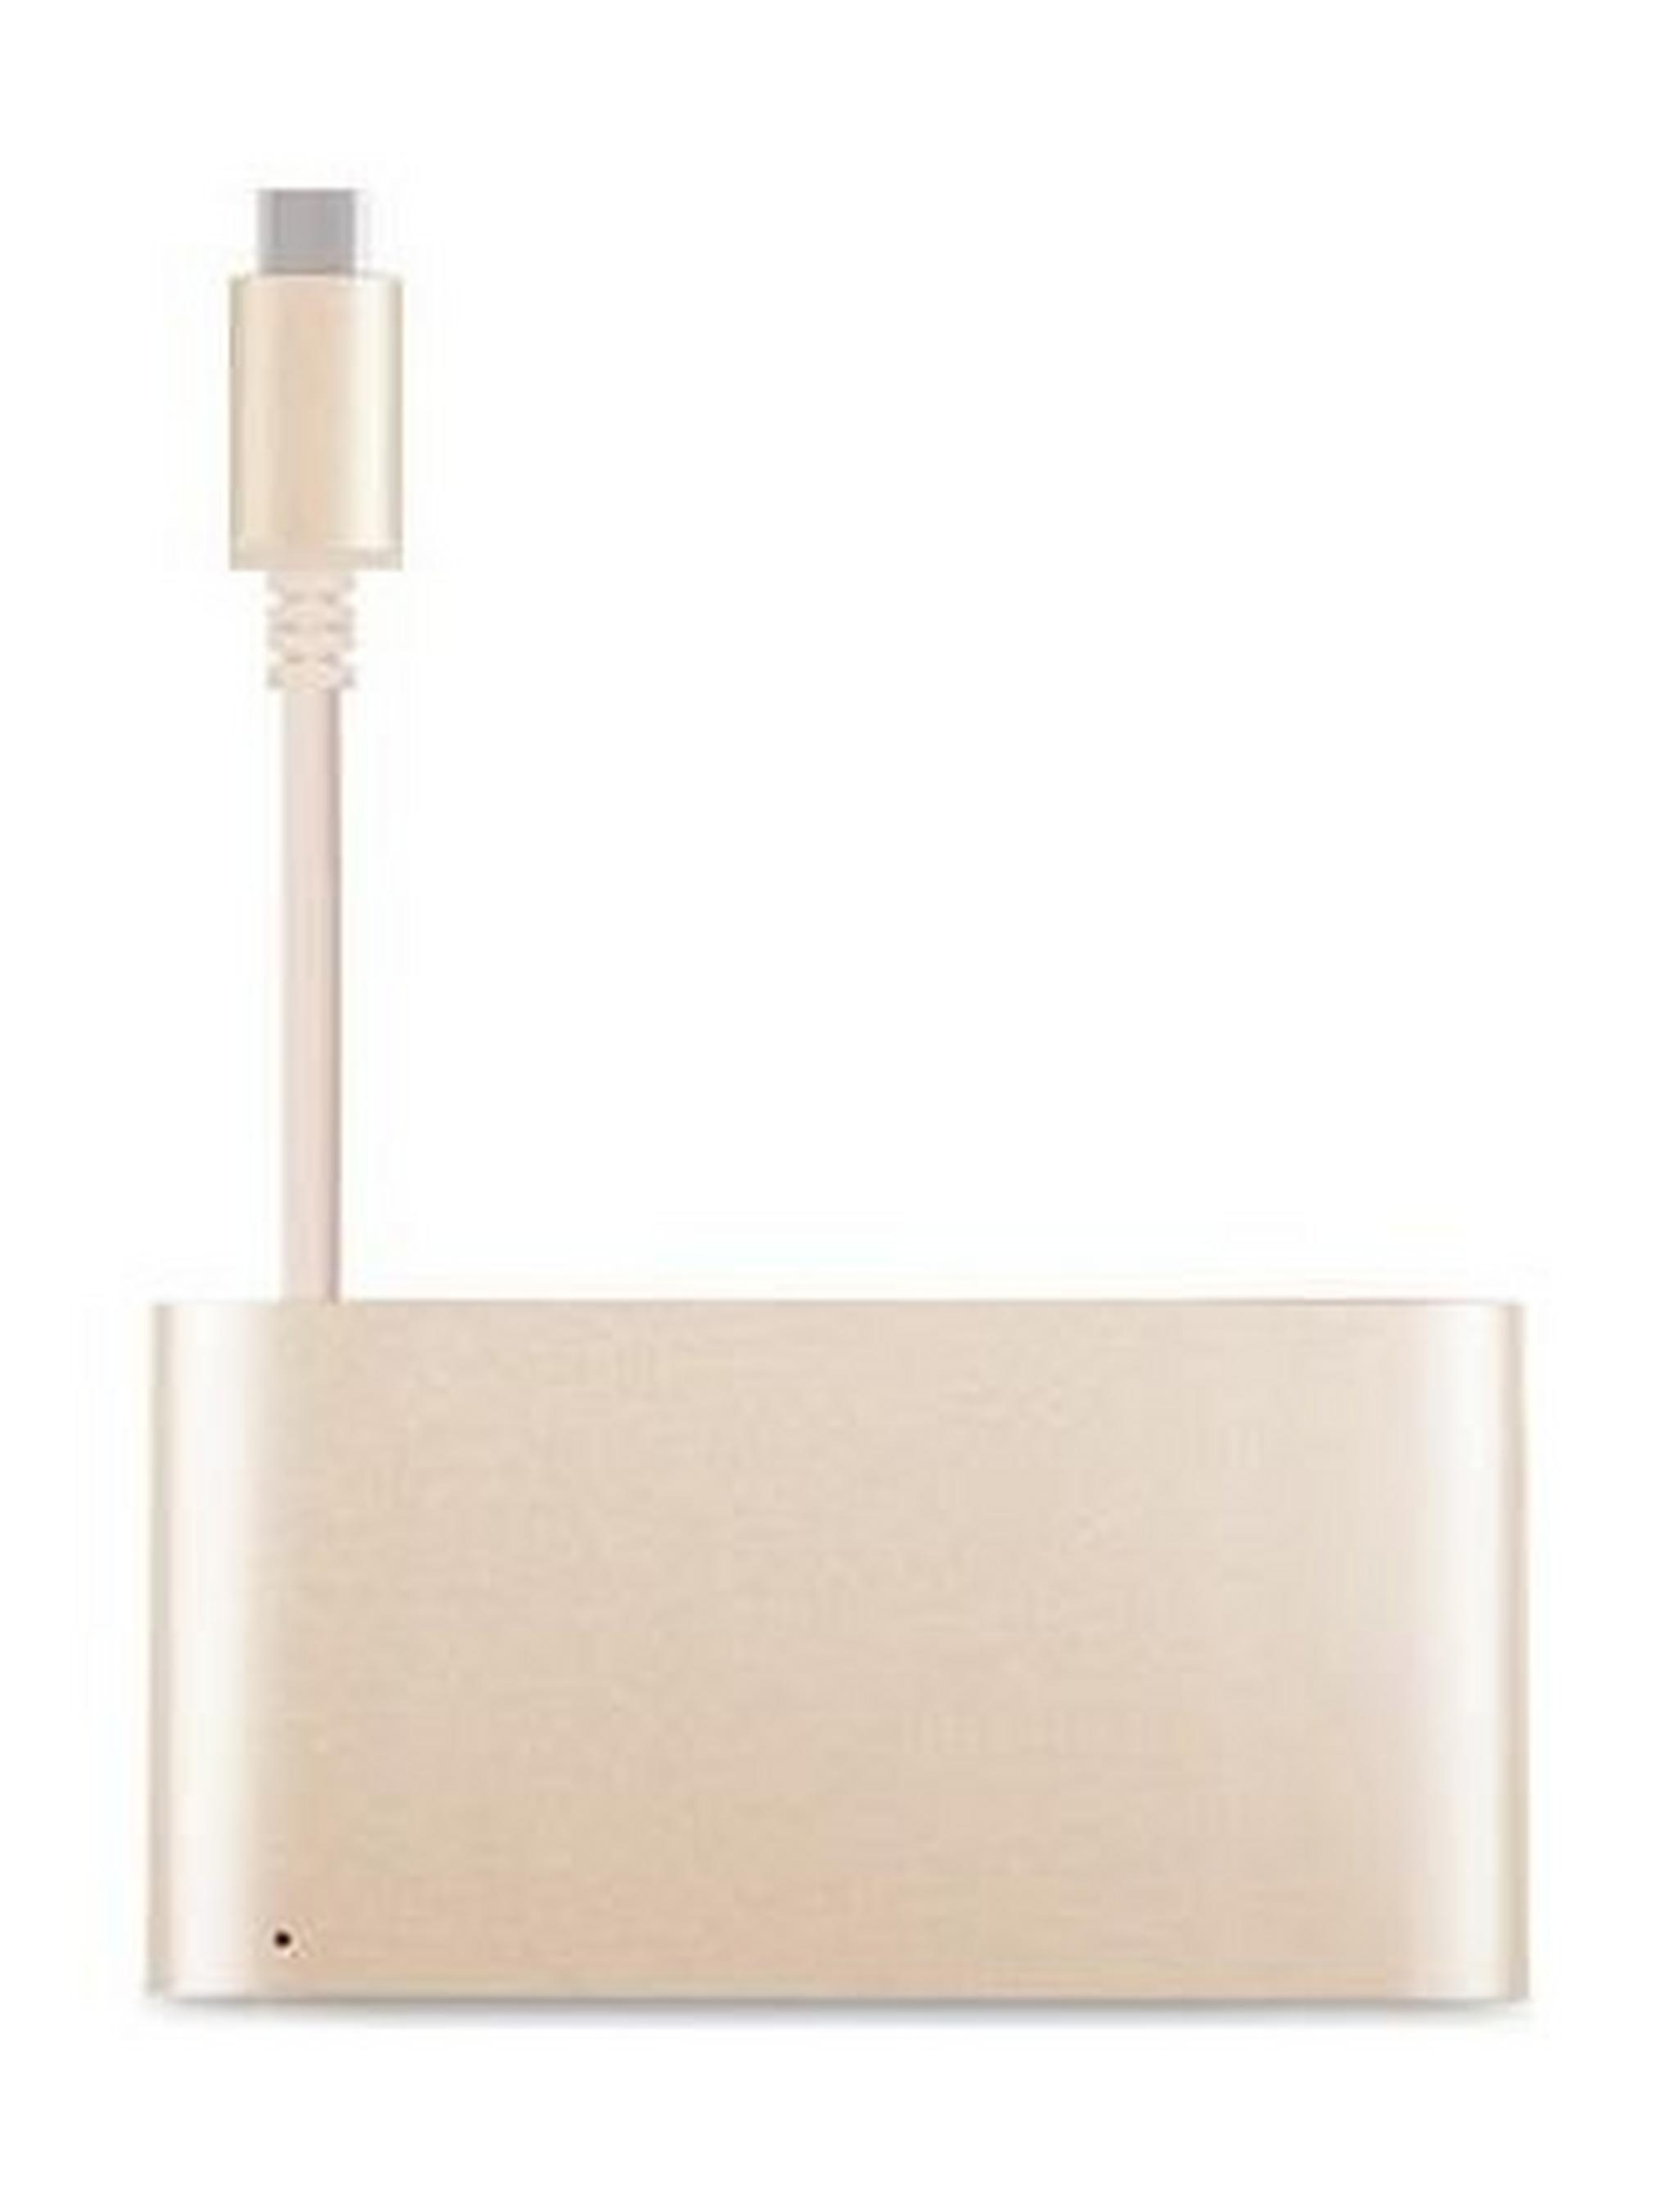 Moshi USB-C Multiport Adapter (99MO084206) - Gold